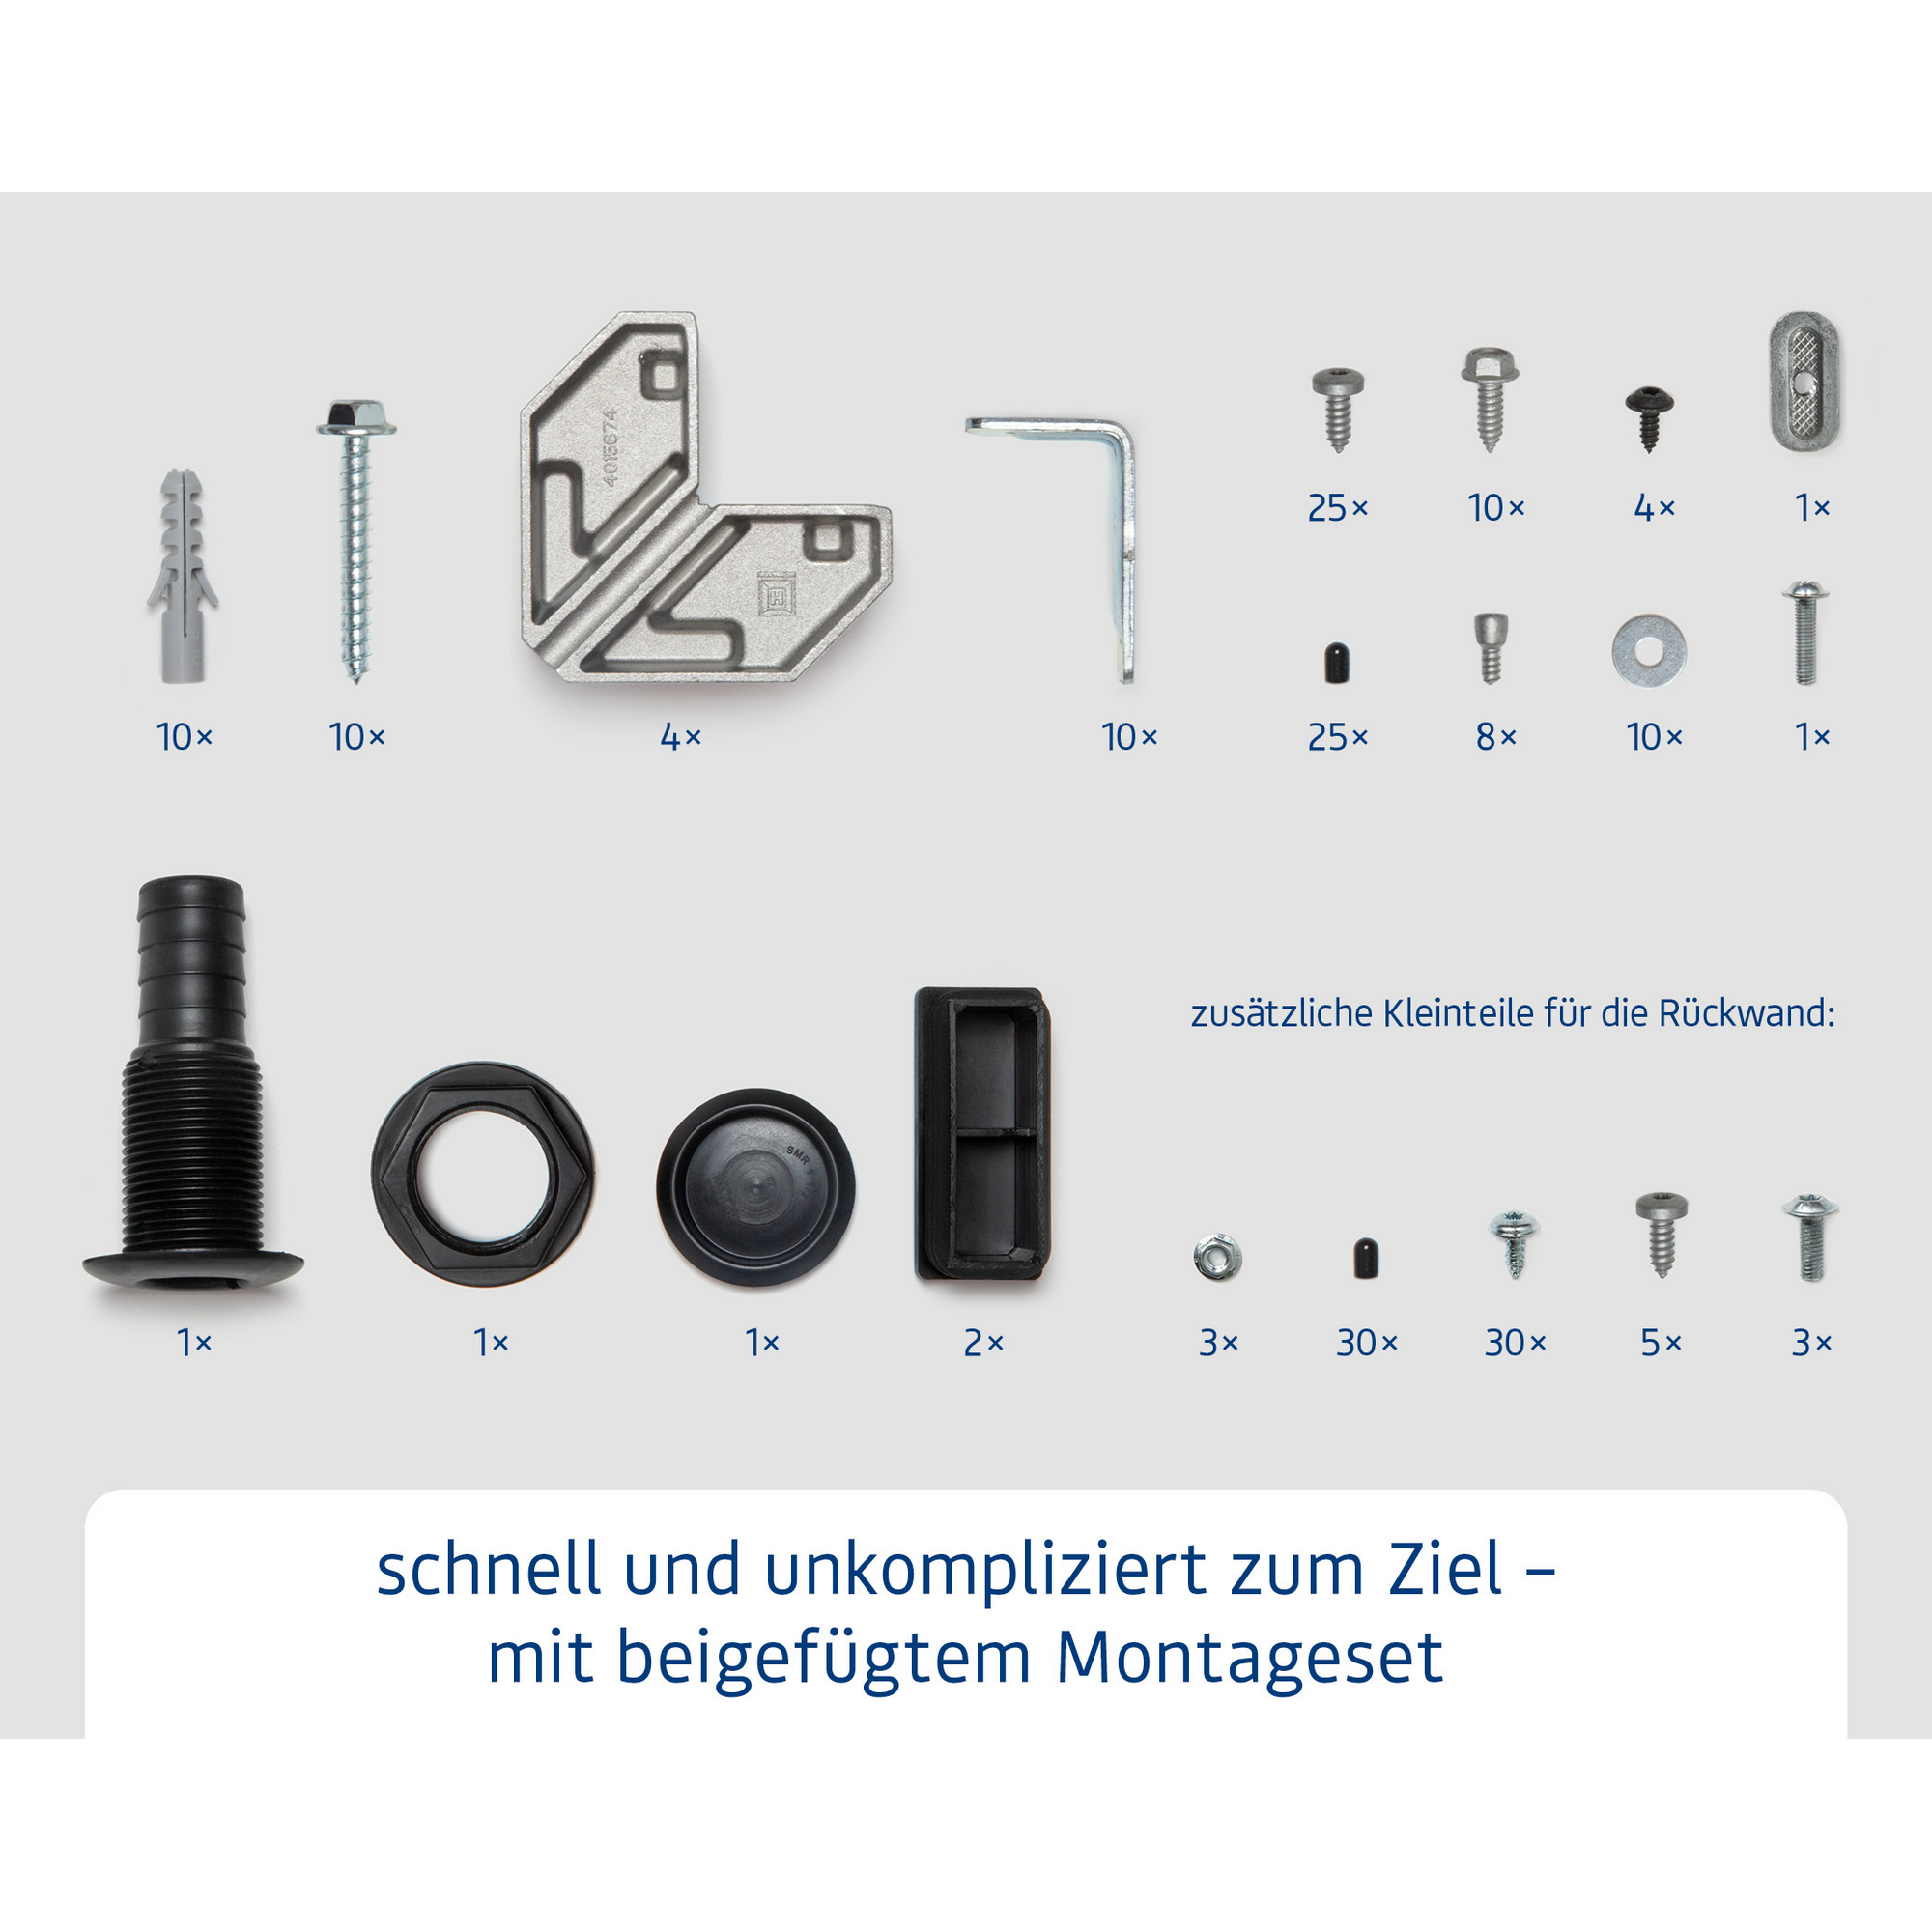 Kaminholzregal 'Trend Typ 2' graualuminium 102,5 x 181,4 x 198 cm + product picture